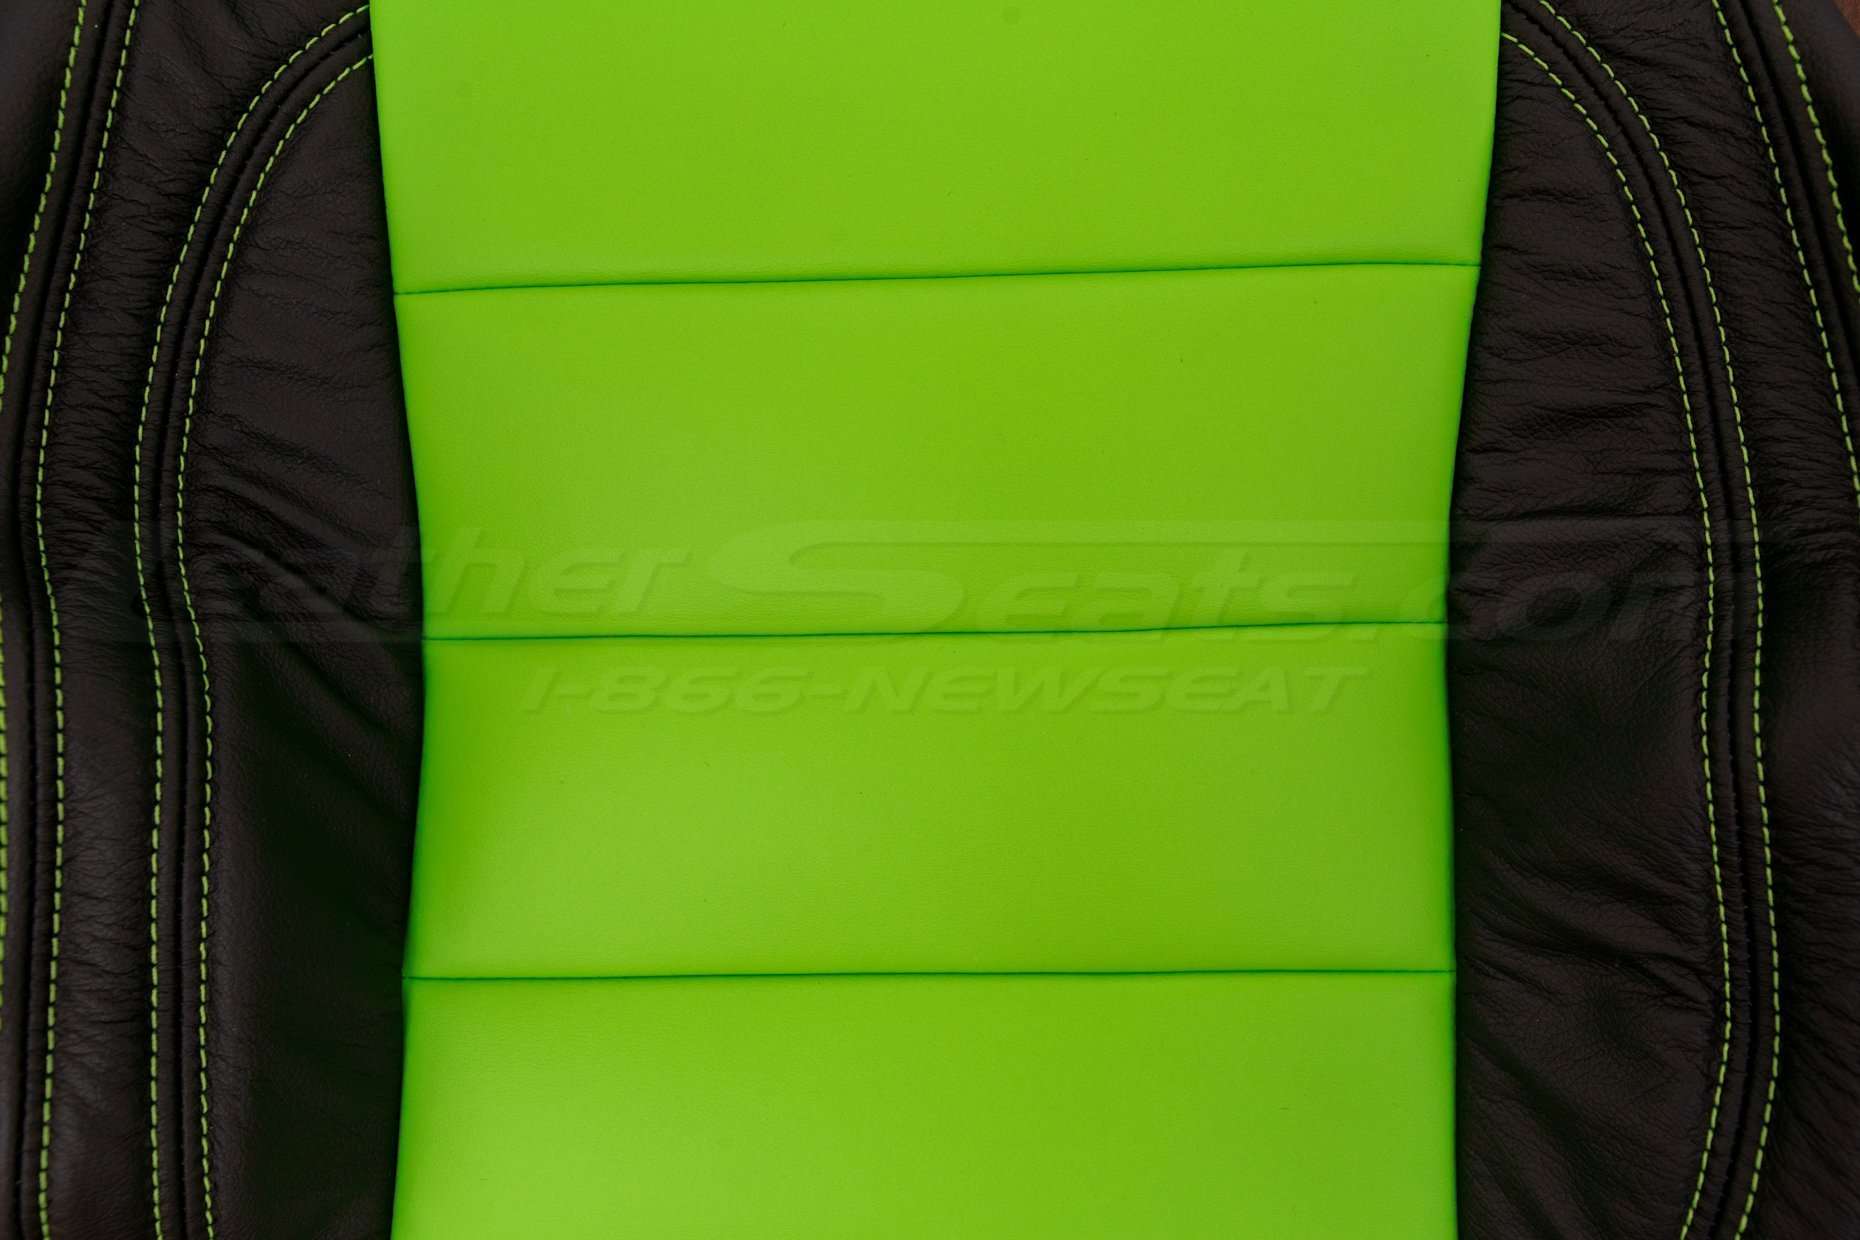 Jeep Wrangler Upholstery Kit - Black & Lime Green - Insert close-up